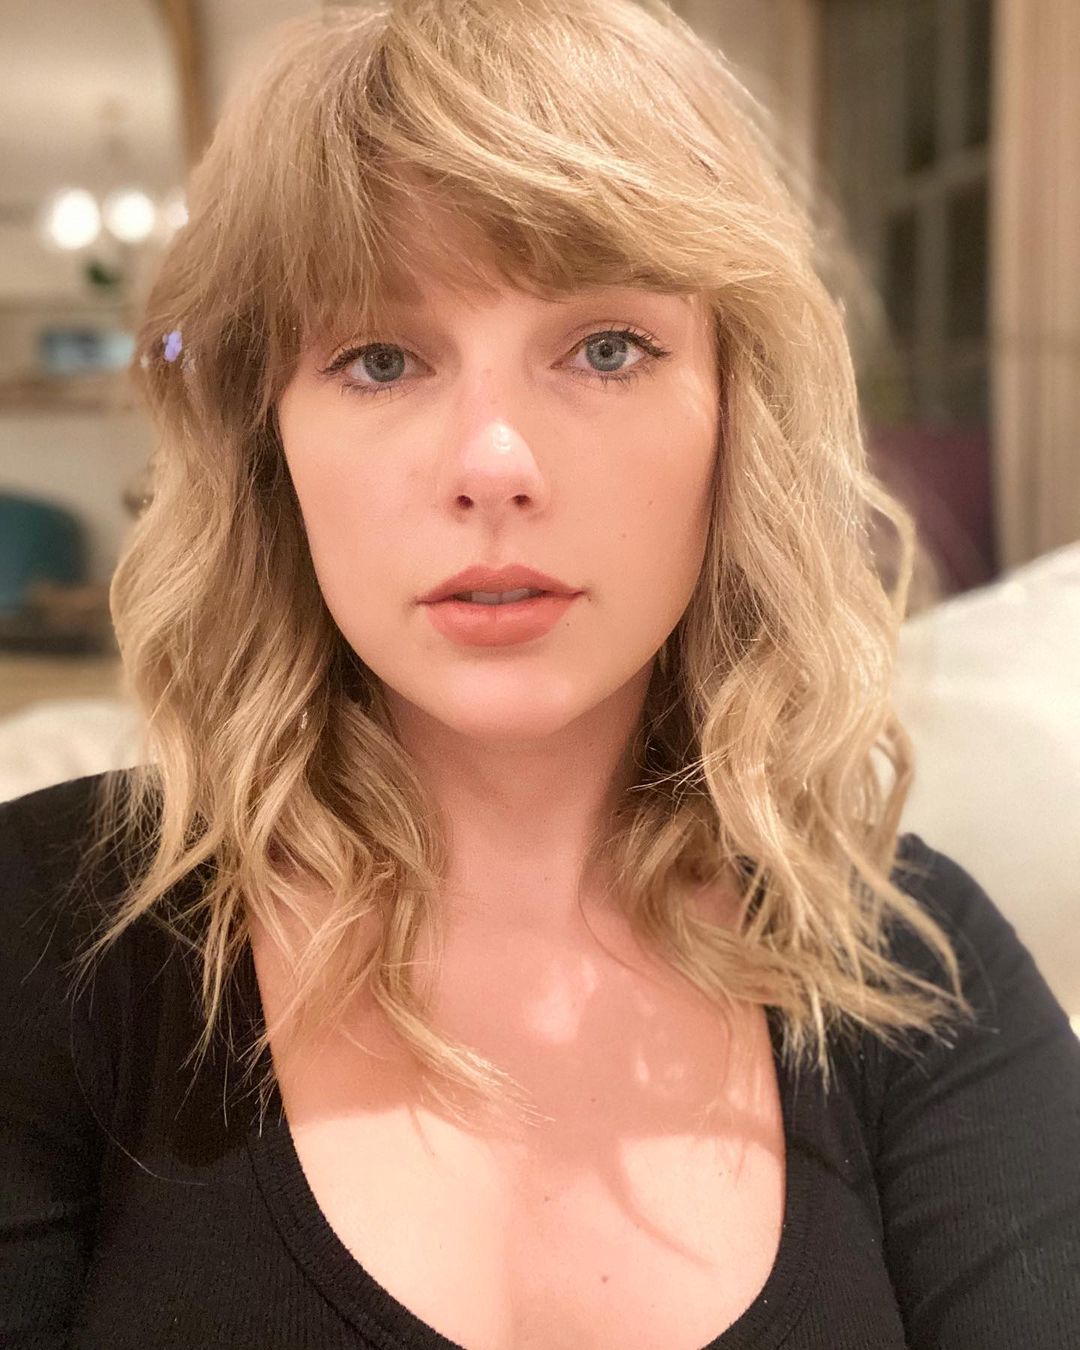 Taylor Swift (Image: Taylor Swift Instagram)